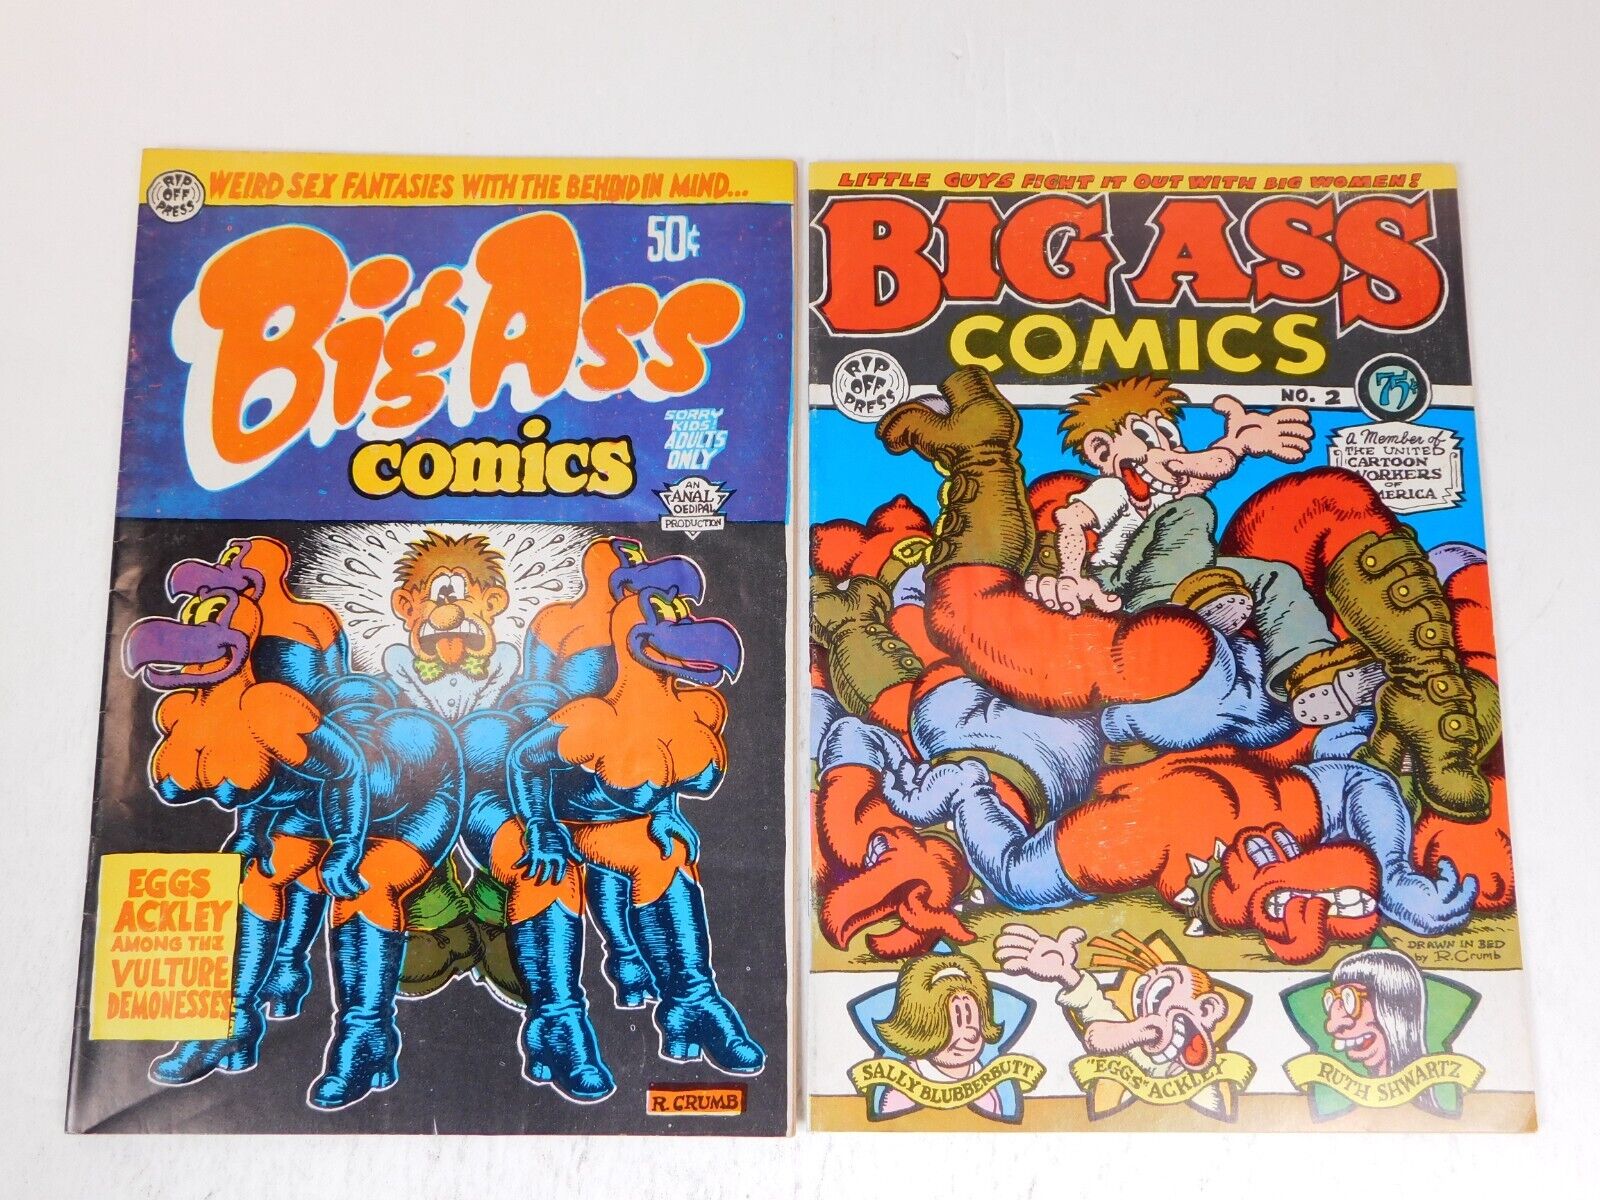 Big Ass Comics #1 & 2 Full Set Underground Comix - All R Crumb